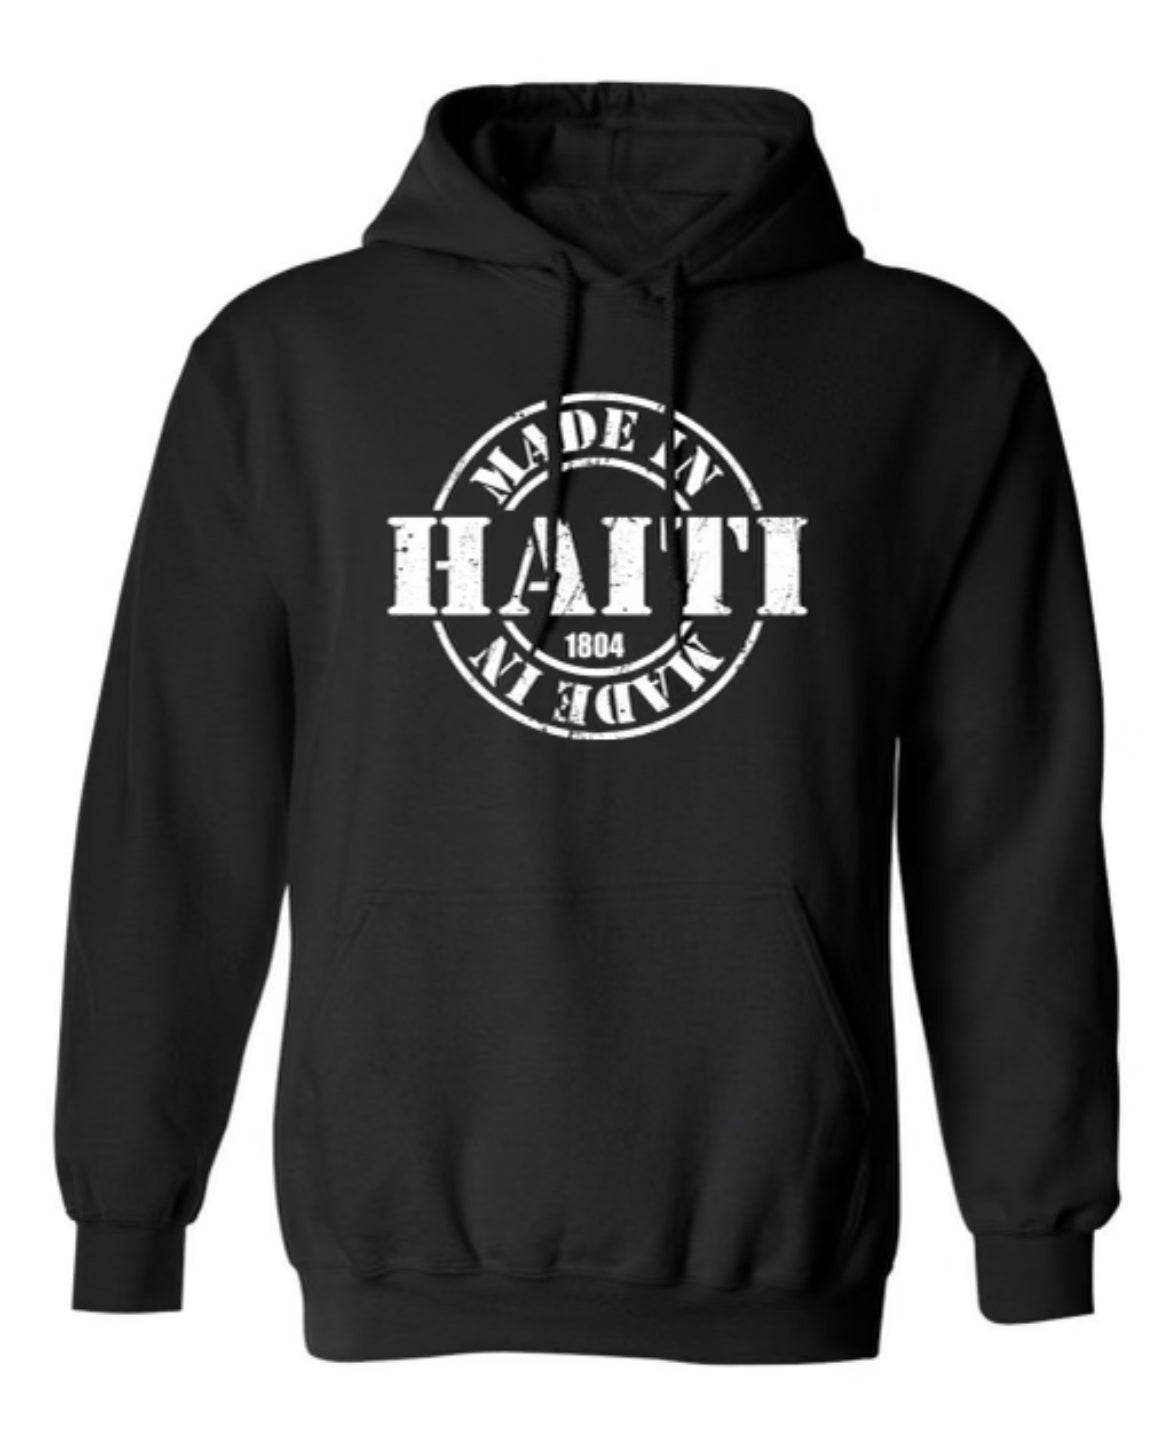 Made in Haiti Puff Hoodie Black